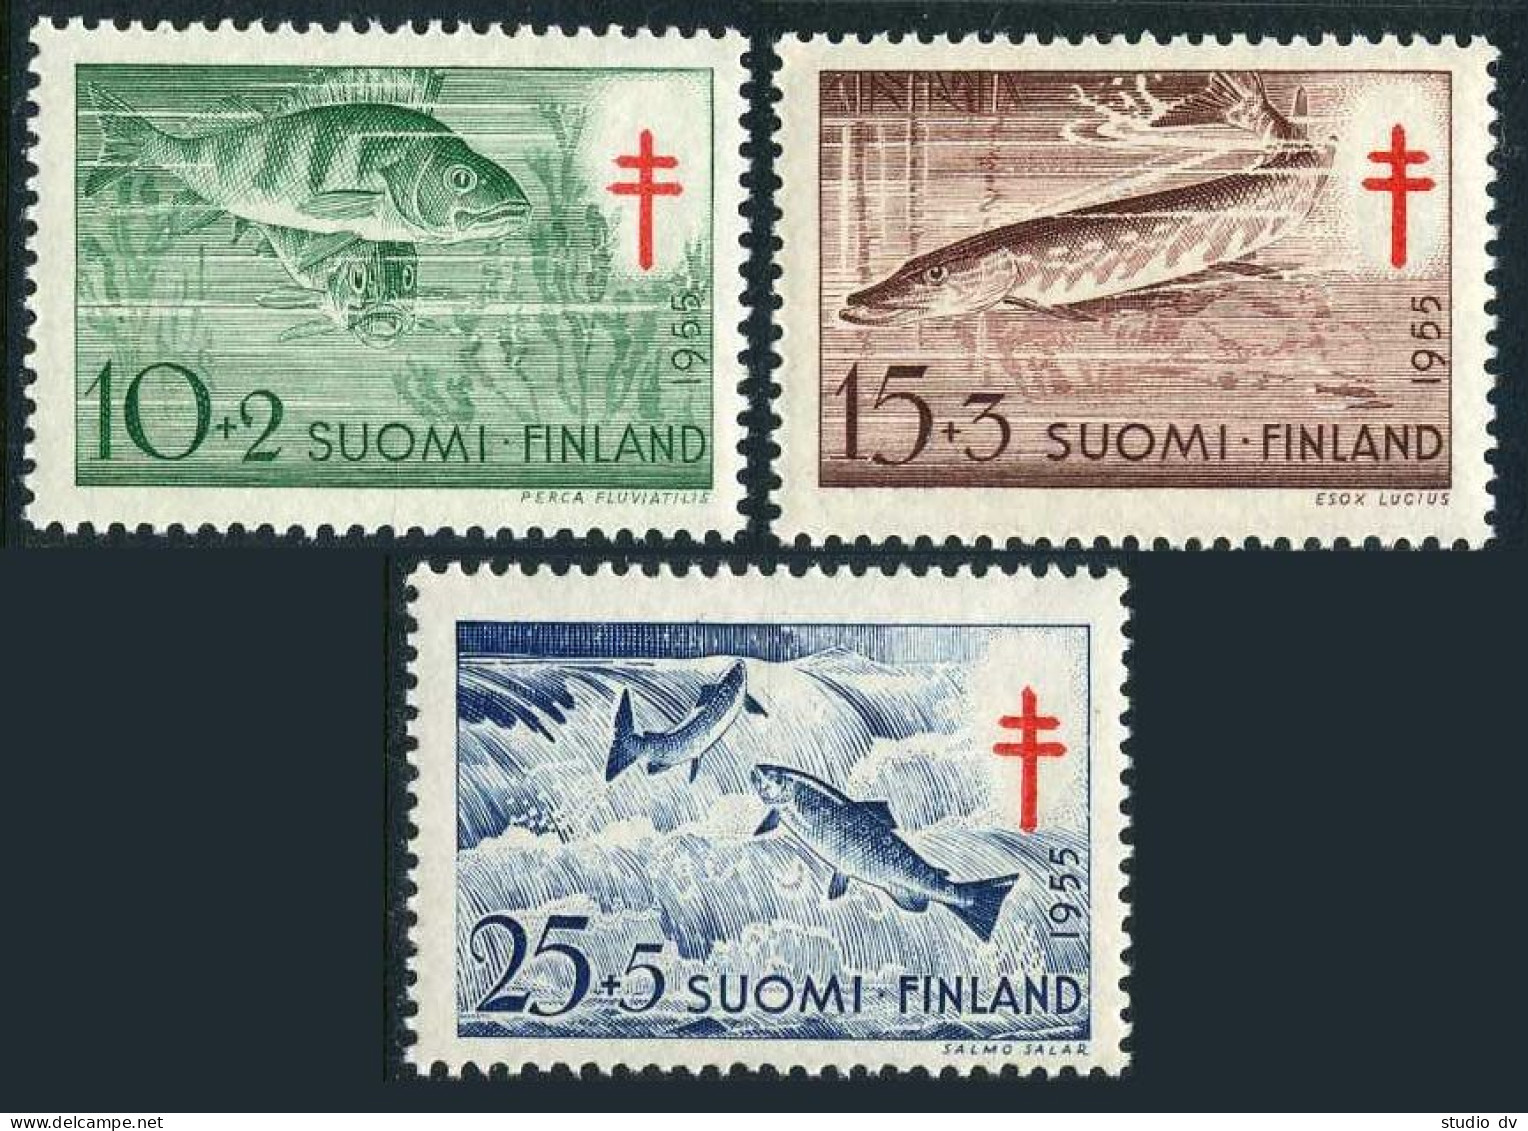 Finland B129-B131, MNH. Michel 443-445. Anti-tuberculosis-1955. Fish. - Nuevos